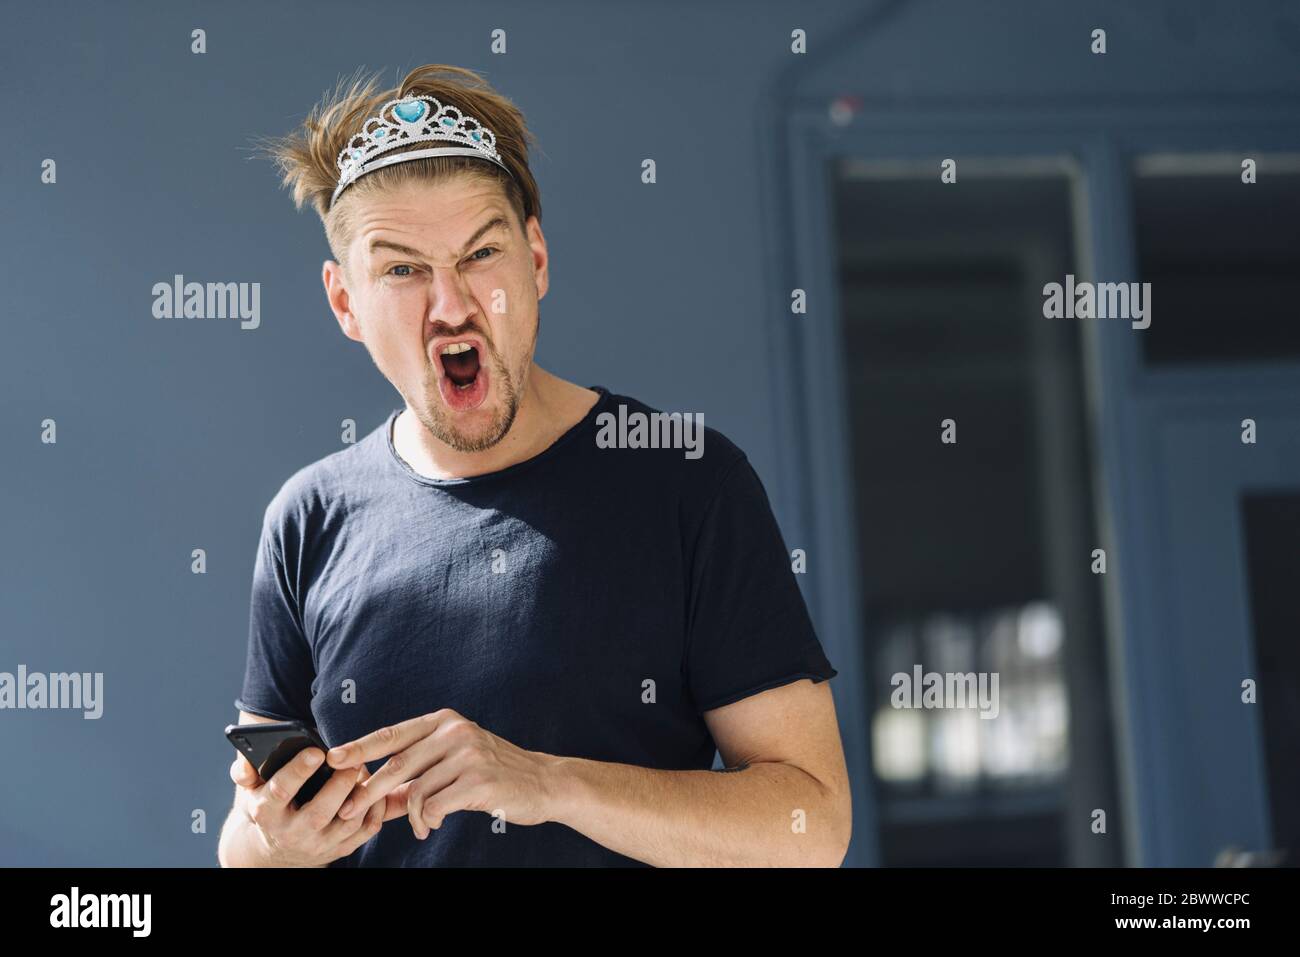 Portrait of a screaming man wearing a tiara Stock Photo